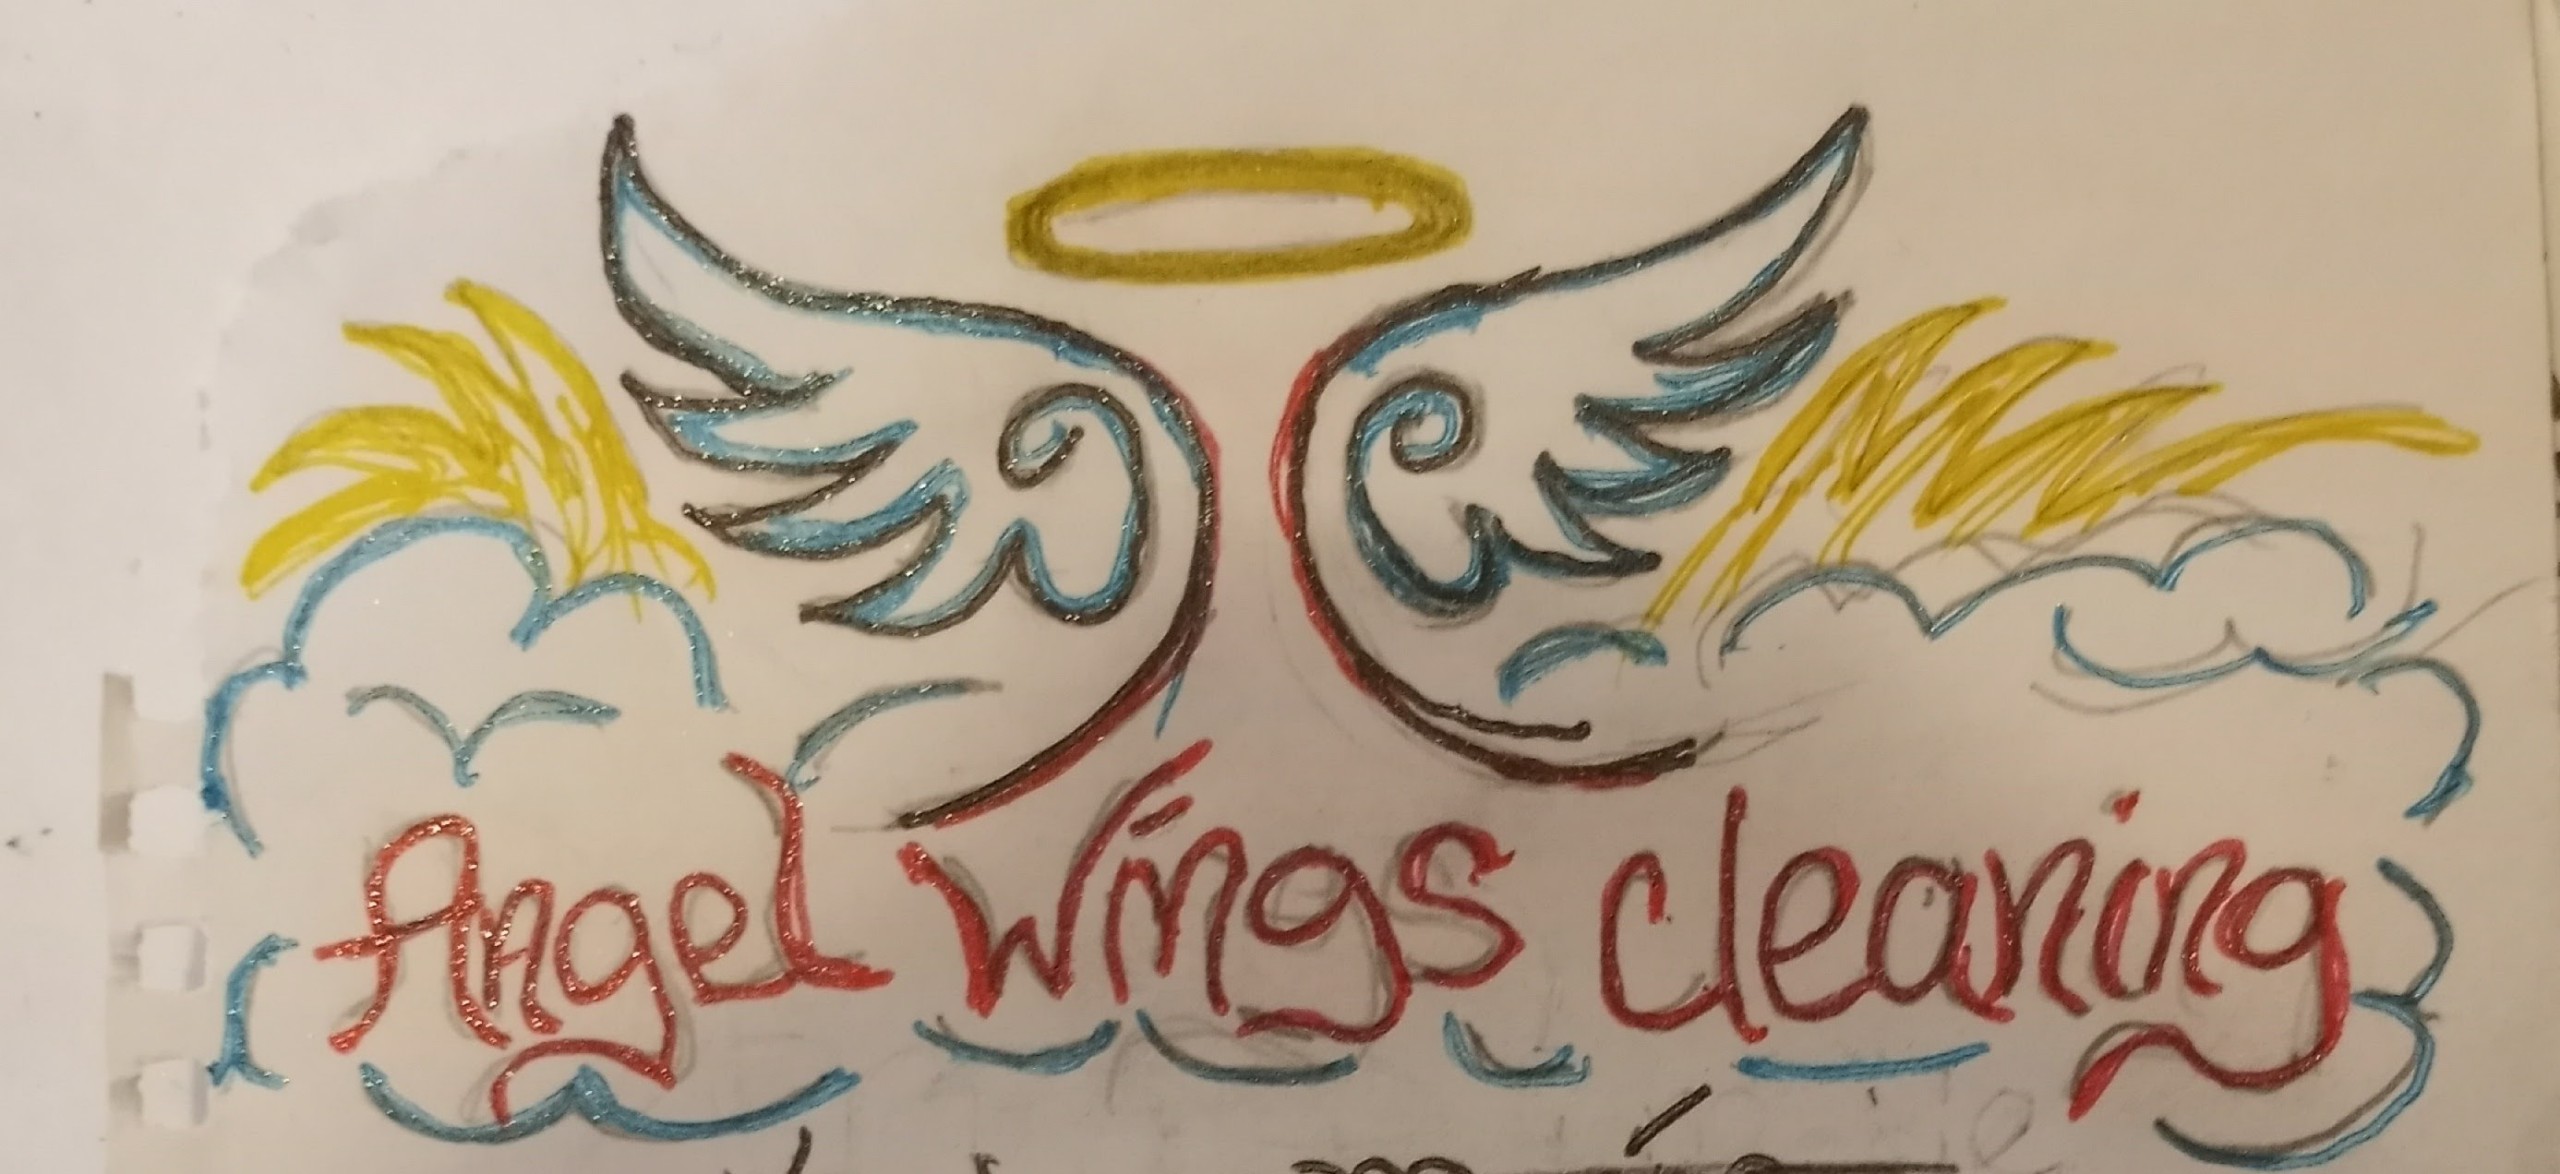 Angel Wings Cleaning Logo